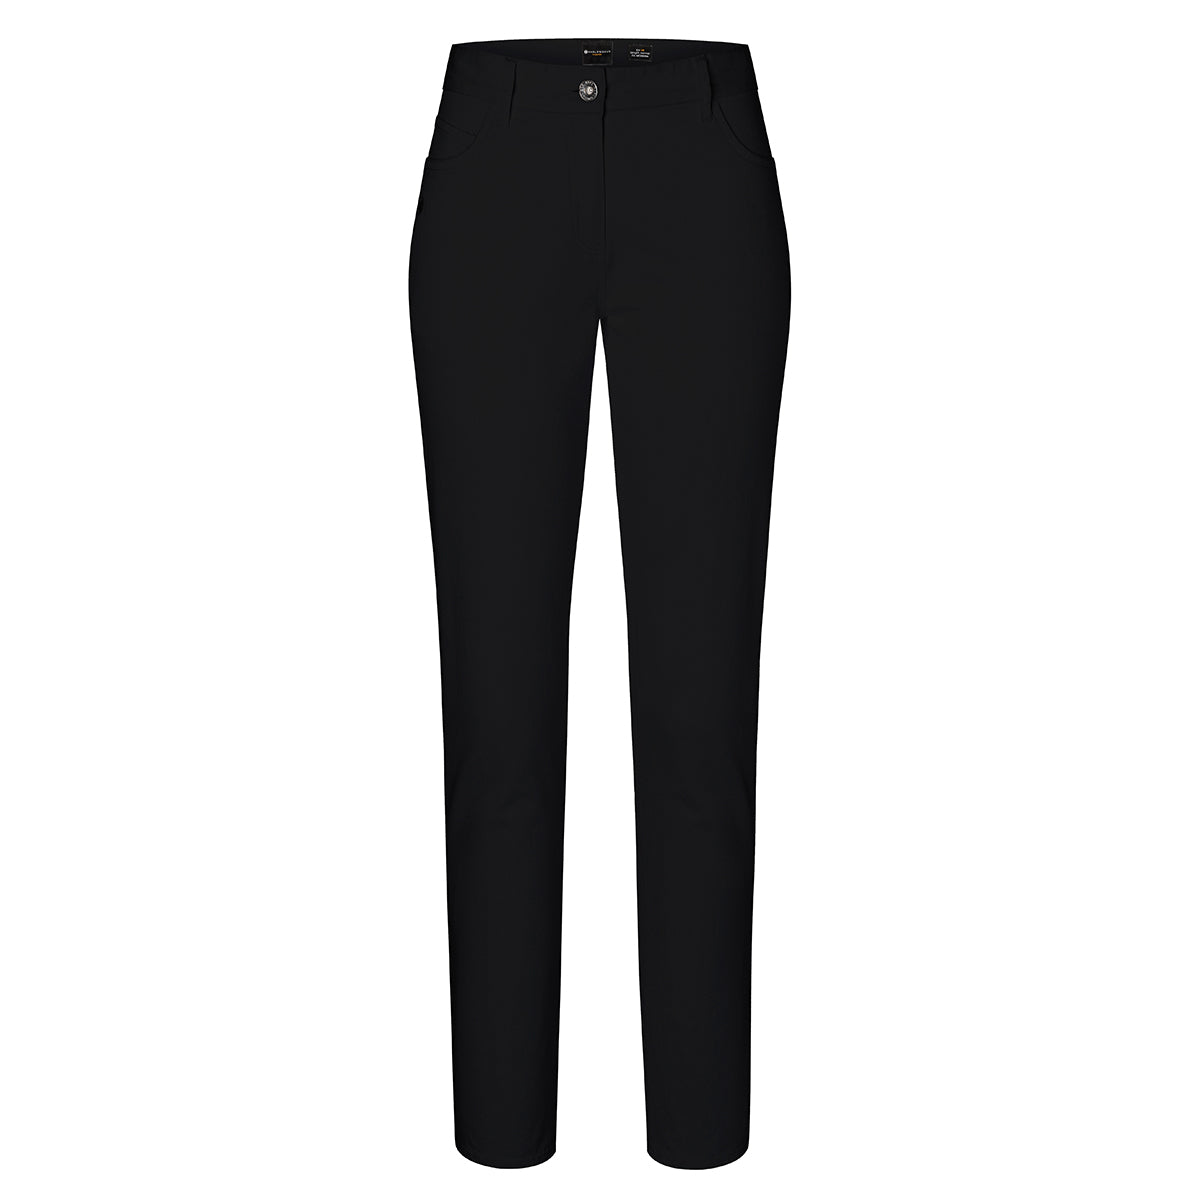 Karlowsky - 5-lomme bukser til damer - Sort - Størrelse: 48